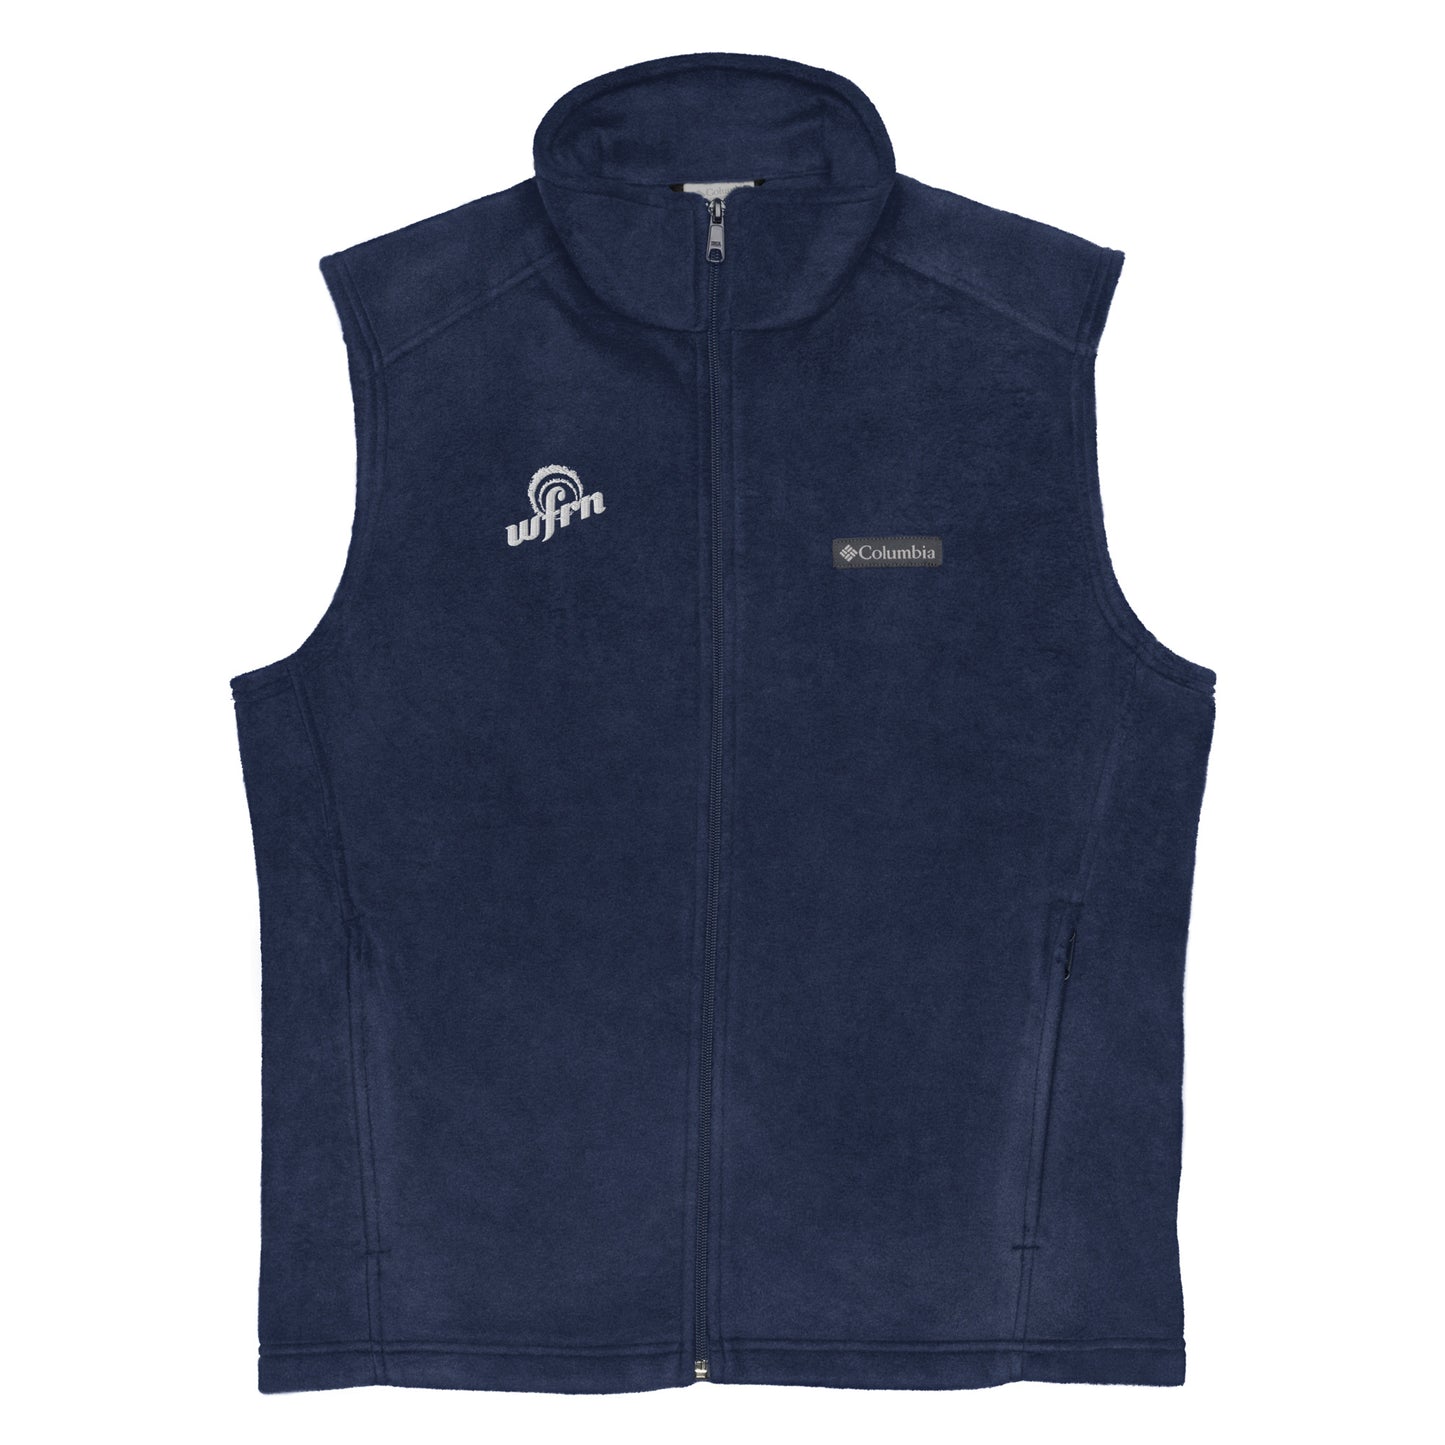 WFRN Embroidered Columbia fleece vest